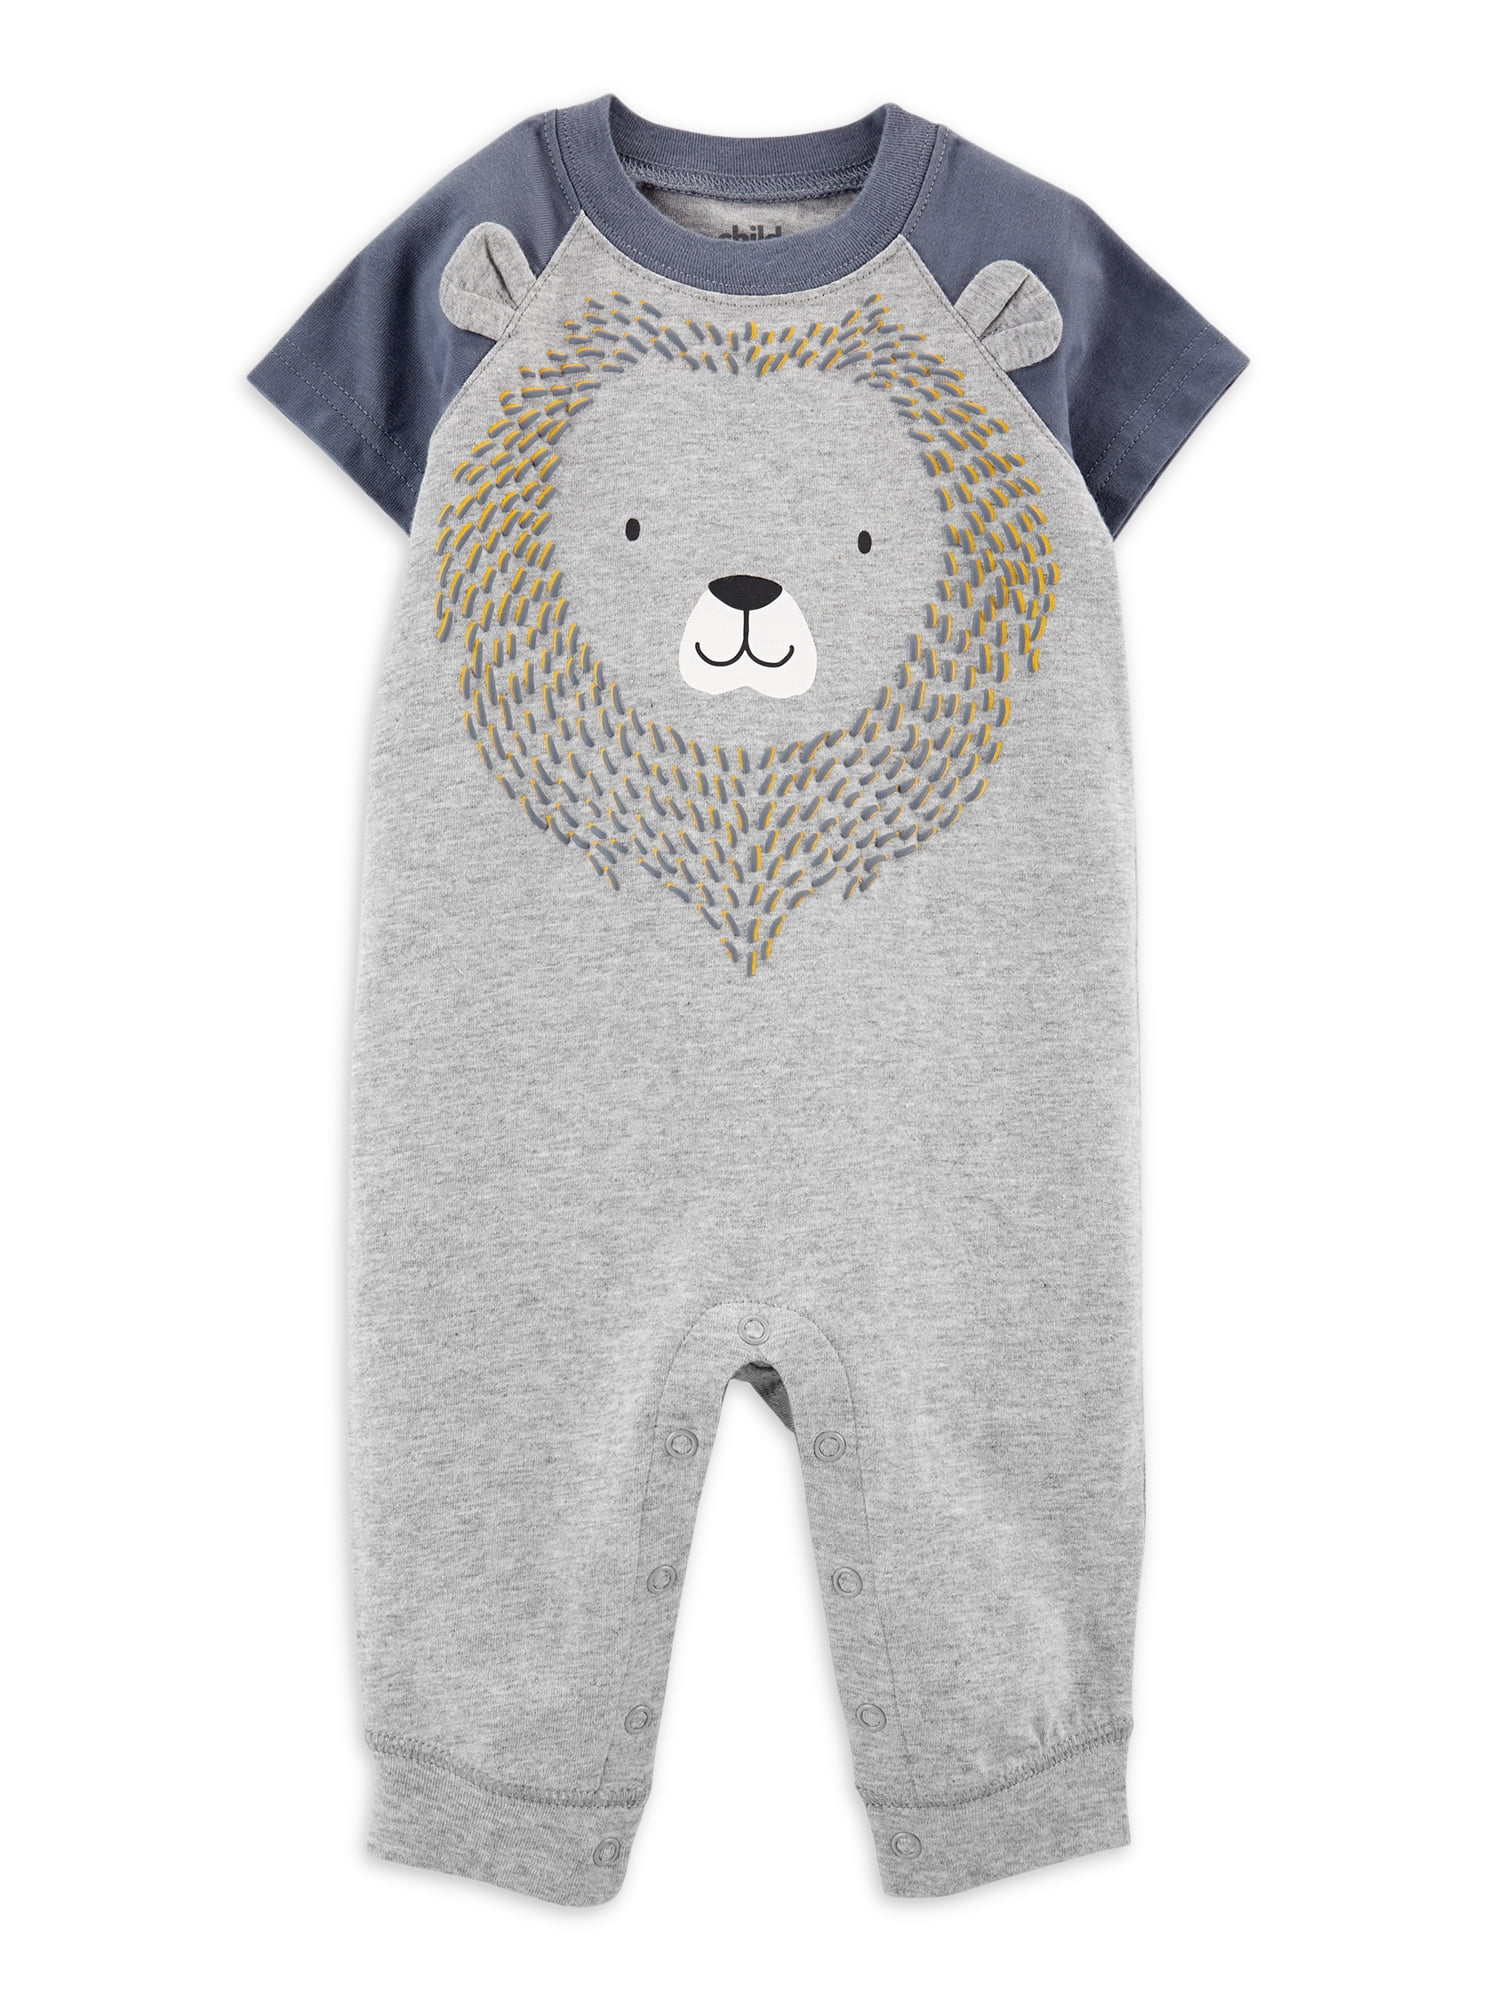 Lion Vintage Organic One-Piece Kid Pajamas Clothes Toddler Baby Boy Romper Jumpsuit